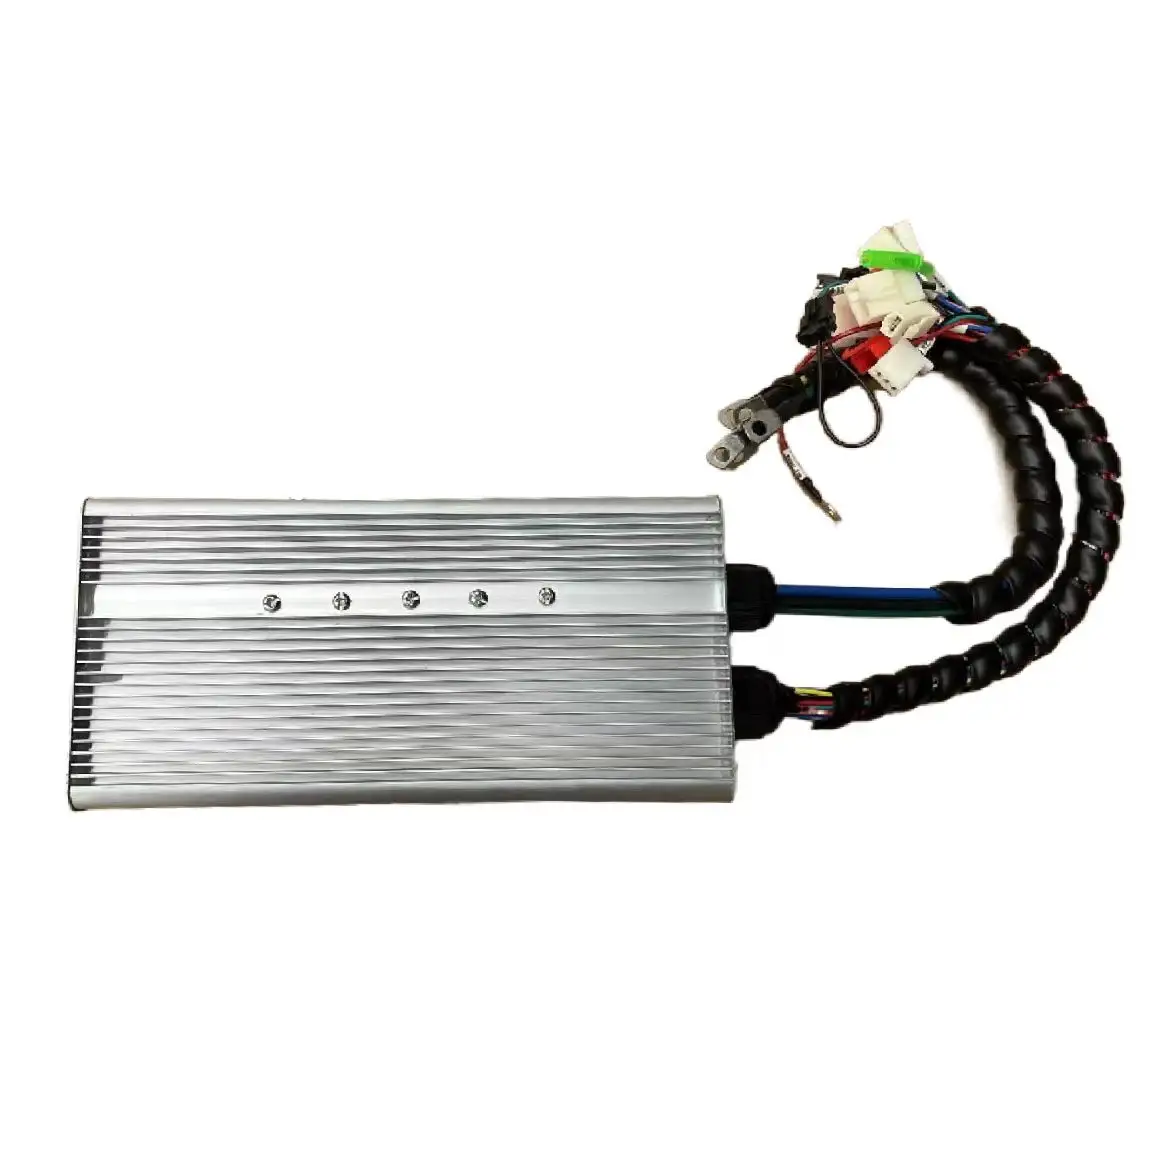 multi-voltage 60-120V 100A 1000-3000W brushless dc motor controller